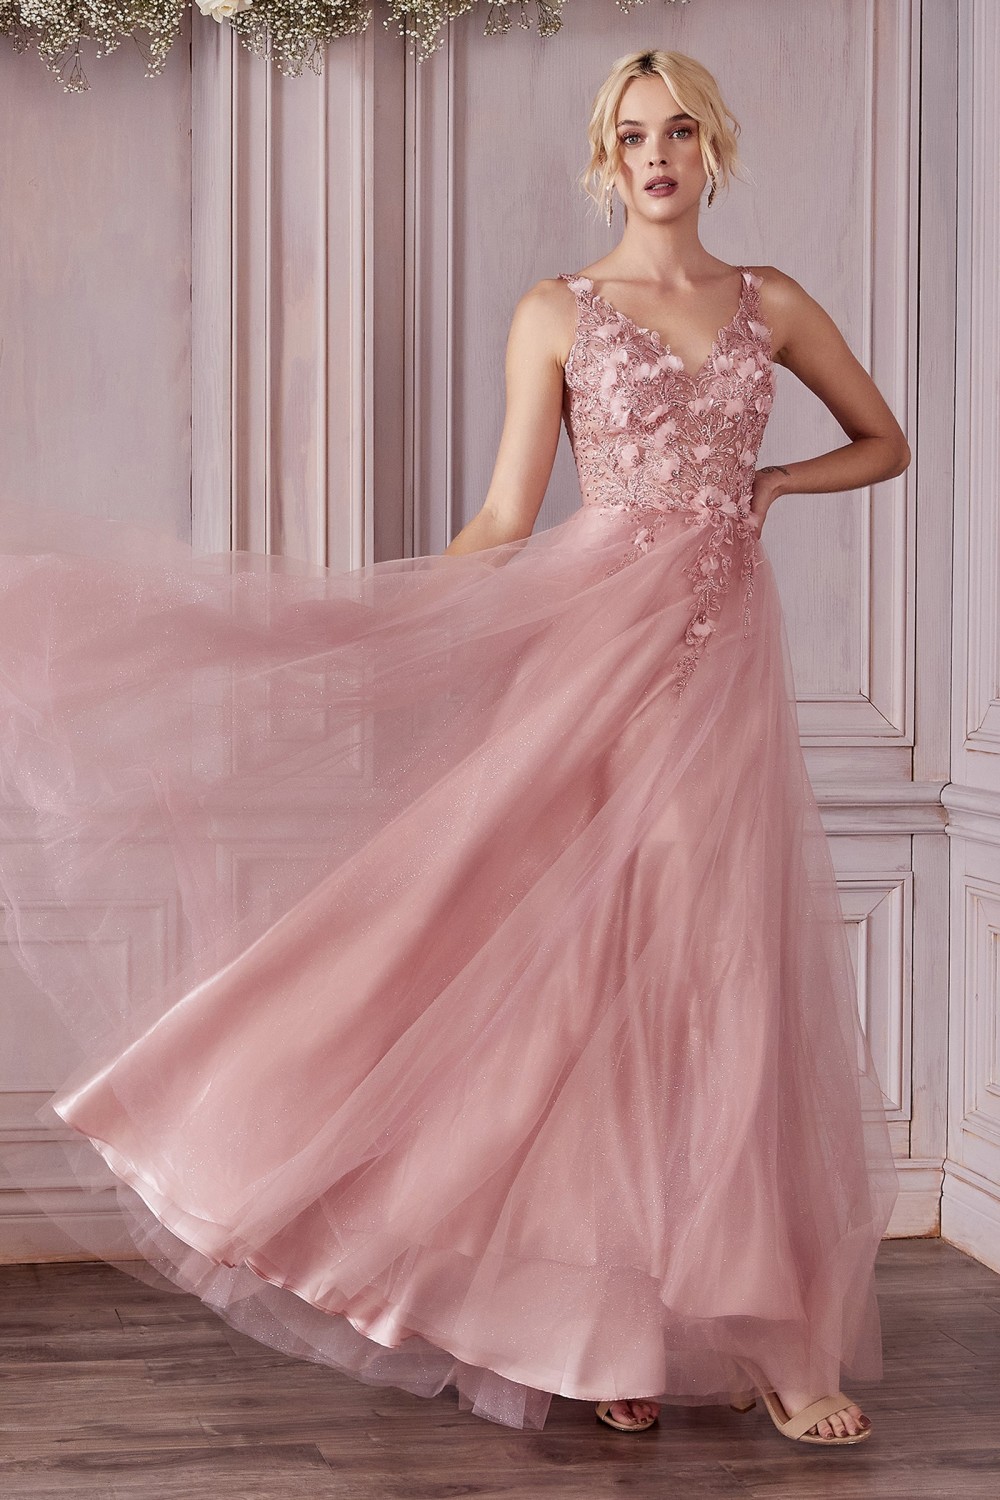 Lacy Dress Pink Beaded Embellished Sweetheart Chiffon Floor Length A-Line Formal Dress, Prom Dress